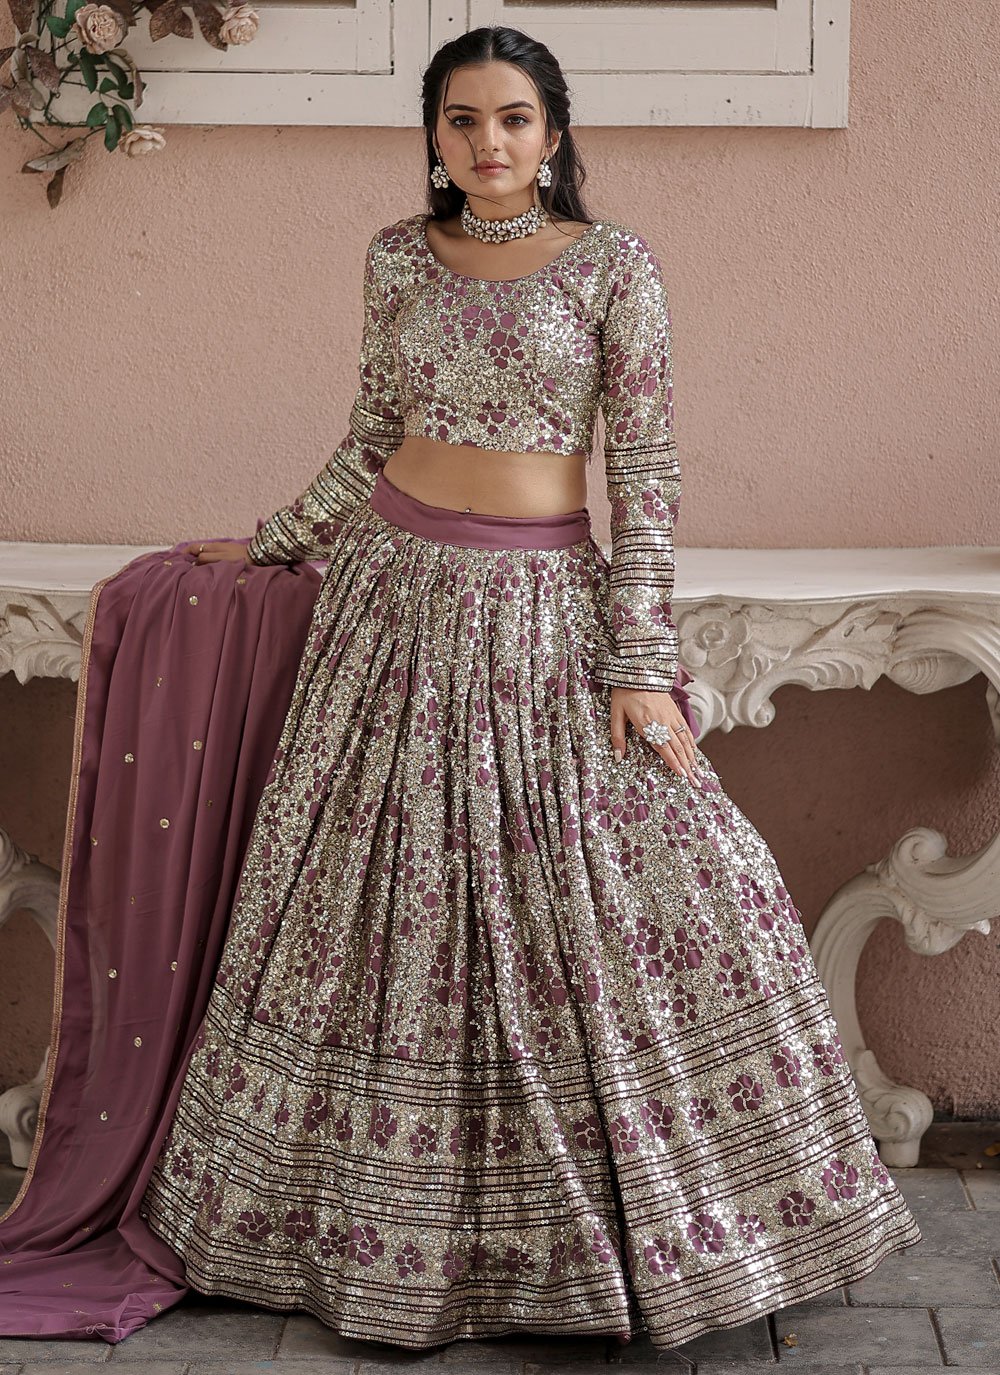 Sequins Work Light Purple Lehenga Choli Lengha Skirt Sari Saree Indian  Lahenga | eBay